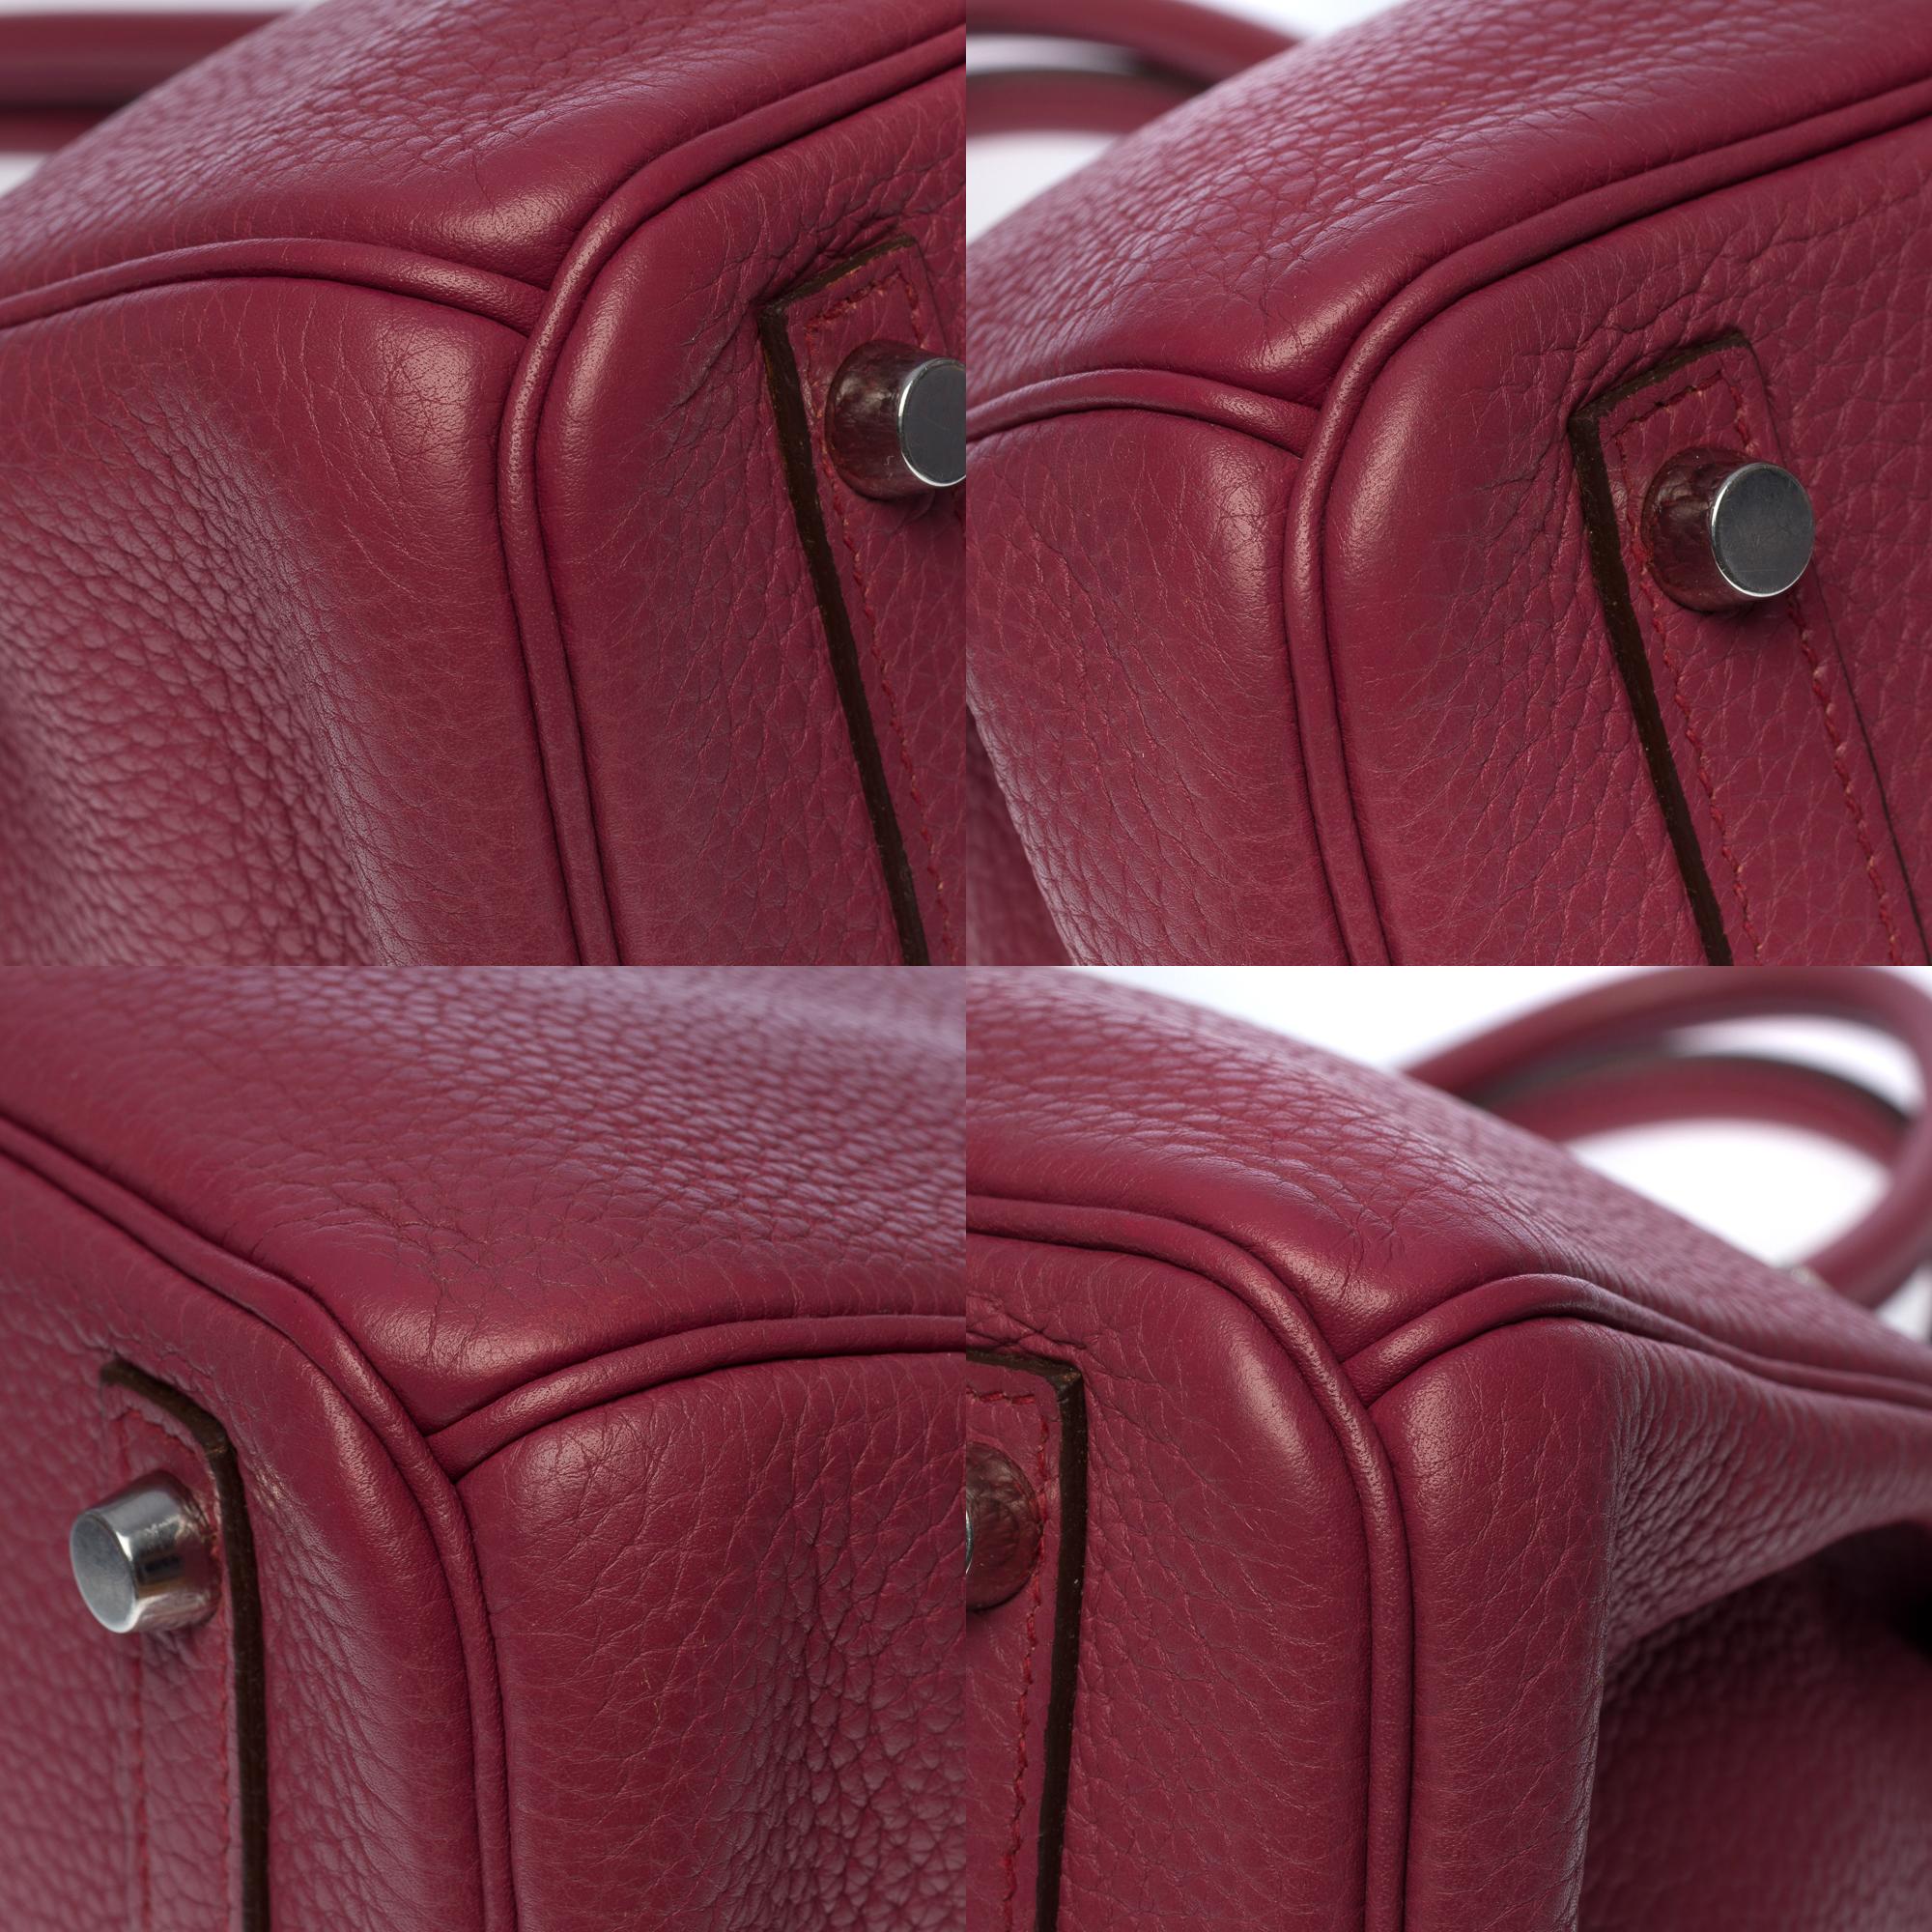 Amazing Hermès Birkin 30 handbag in Bois de rose Togo leather, SHW For Sale 3